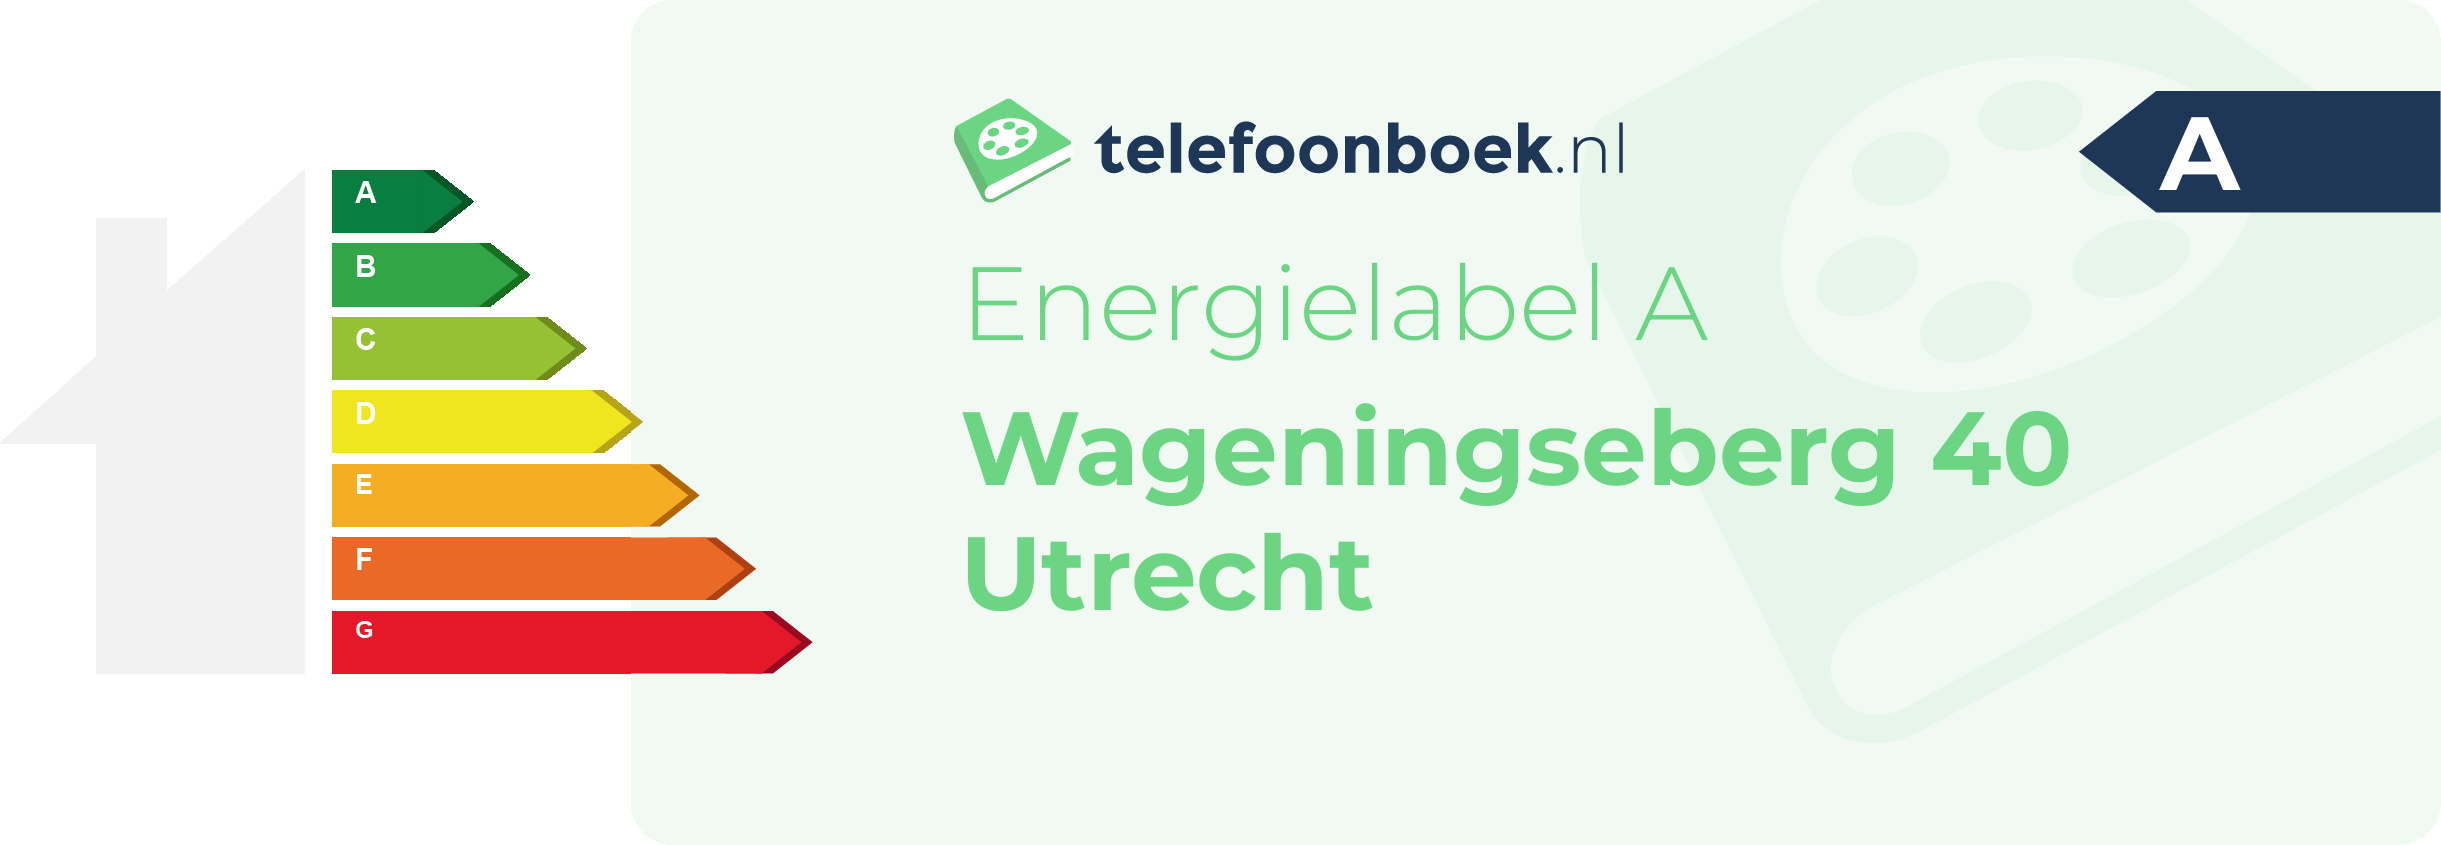 Energielabel Wageningseberg 40 Utrecht